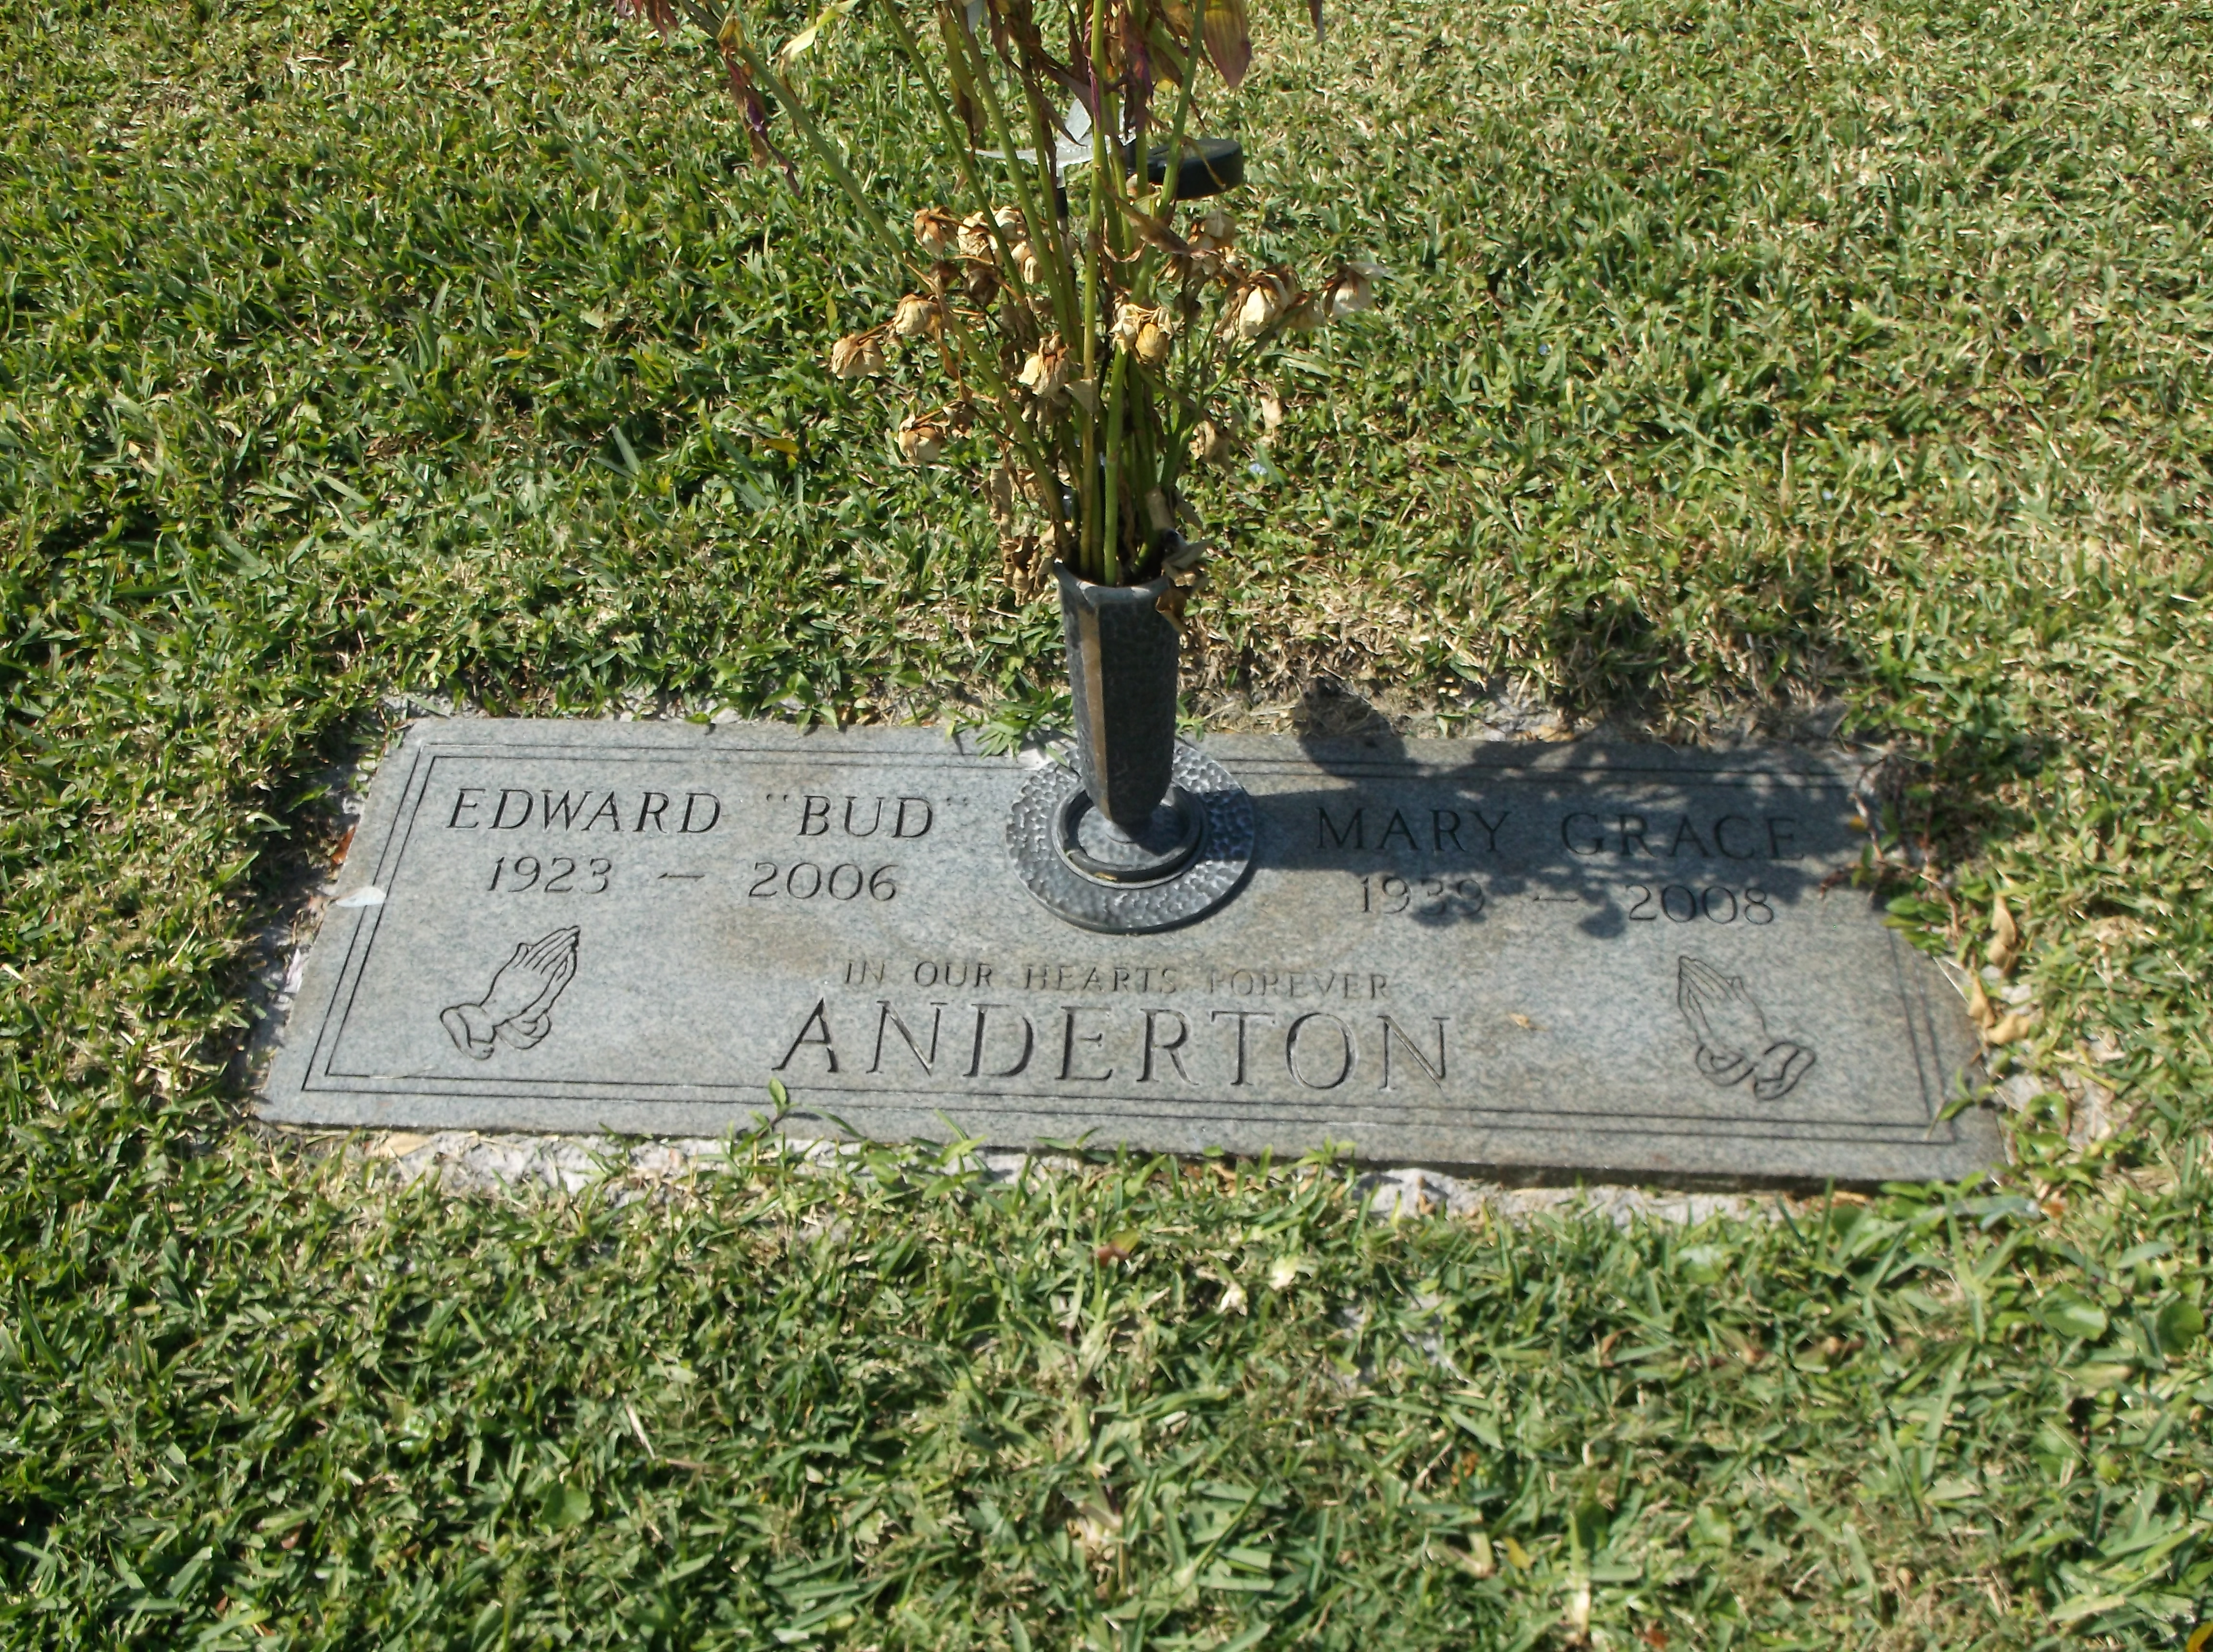 Edward "Bud" Anderton